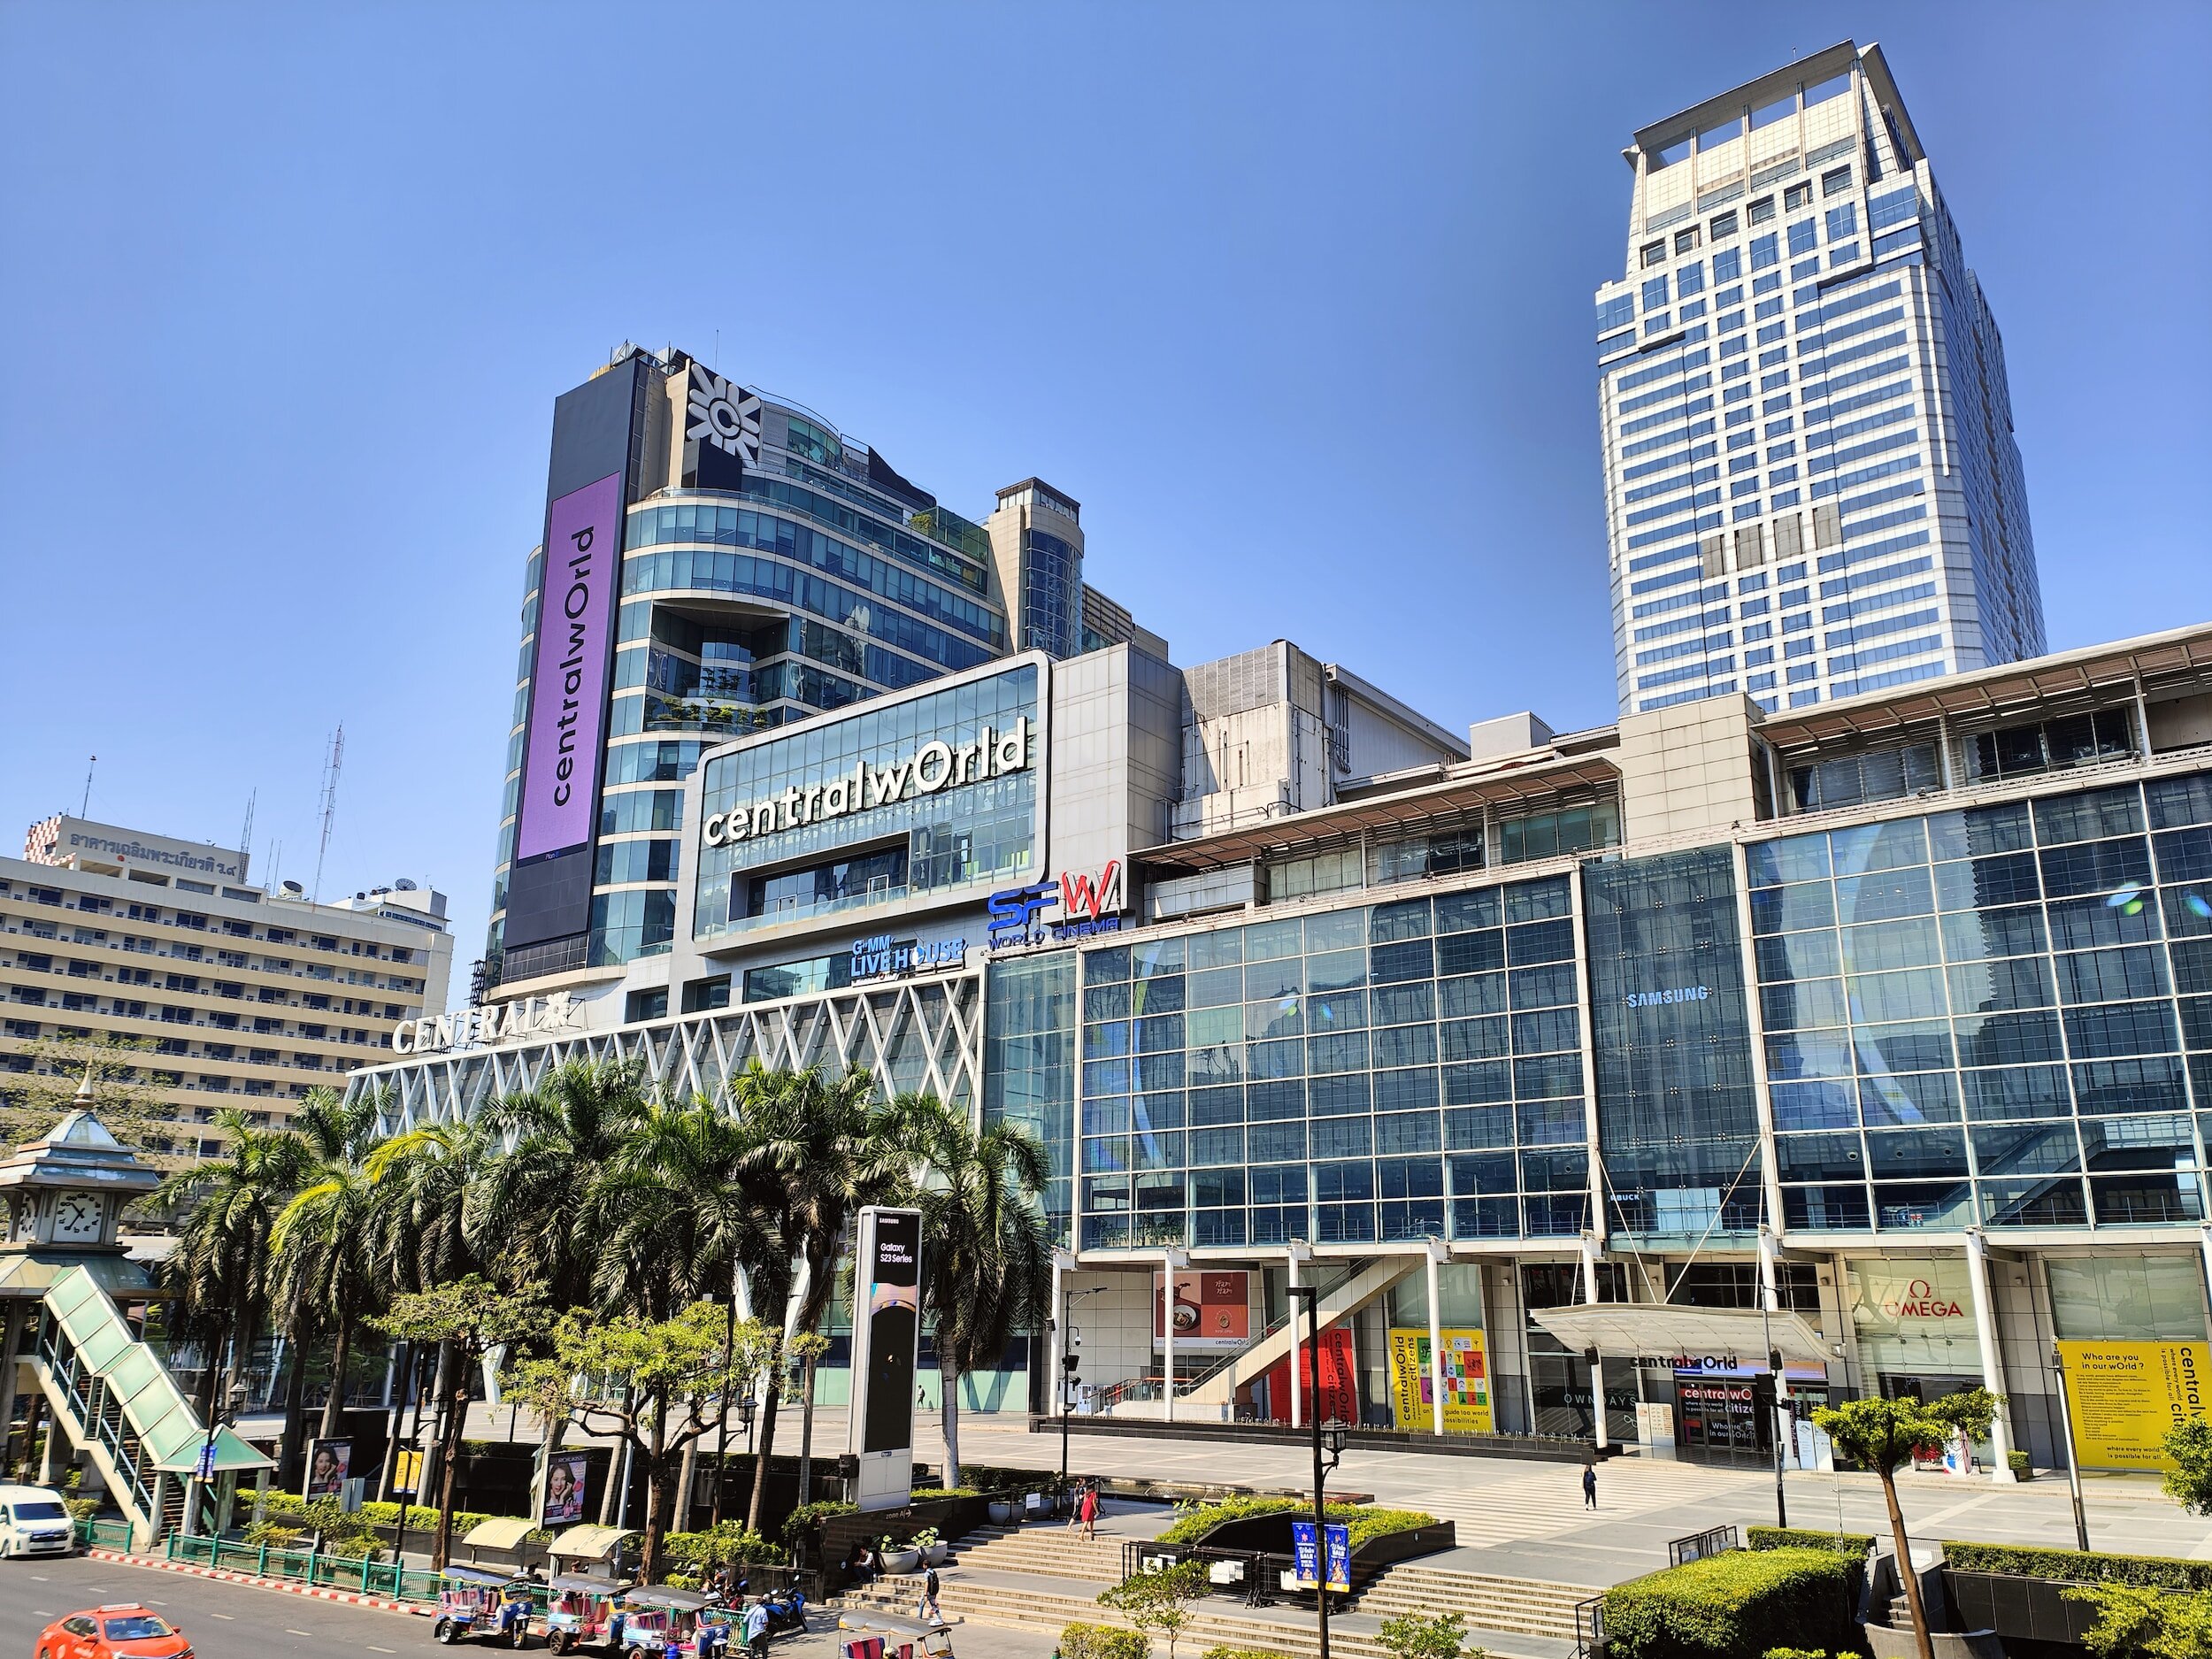 Thailand has great markets, but also mega malls where shopping is an artform